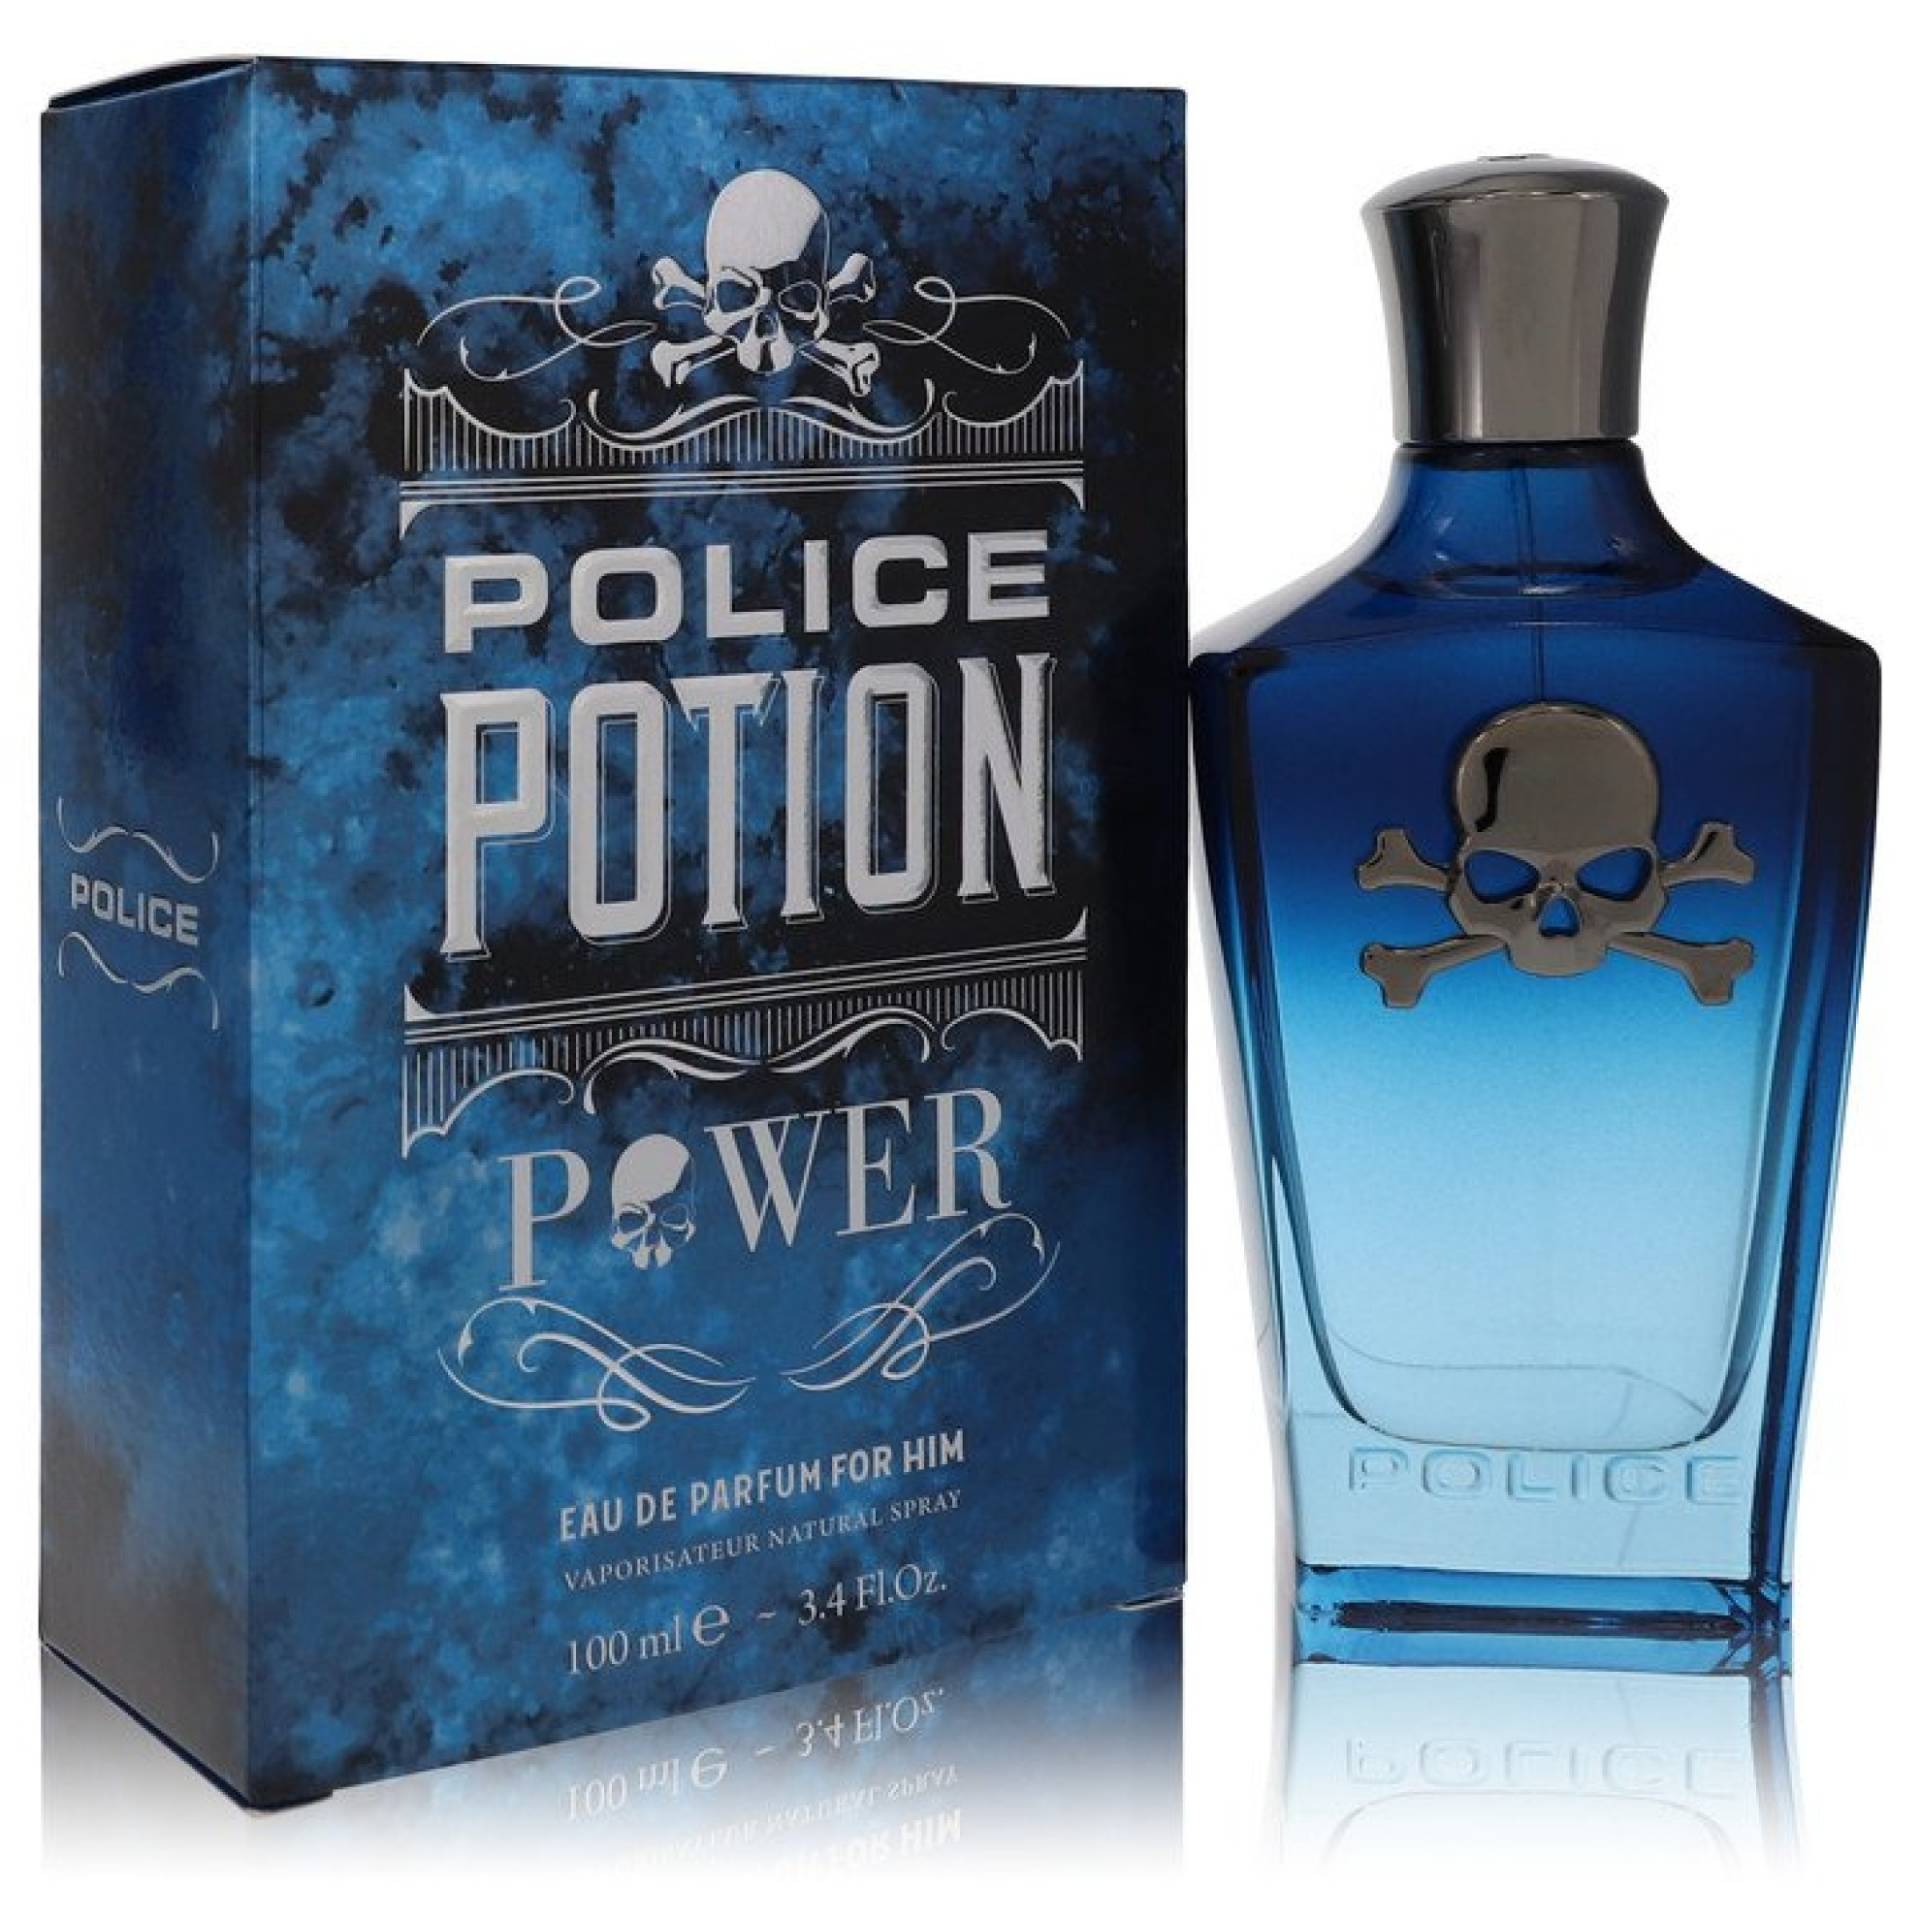 Police Colognes Police Potion Power Eau De Parfum Spray 100 ml von Police Colognes